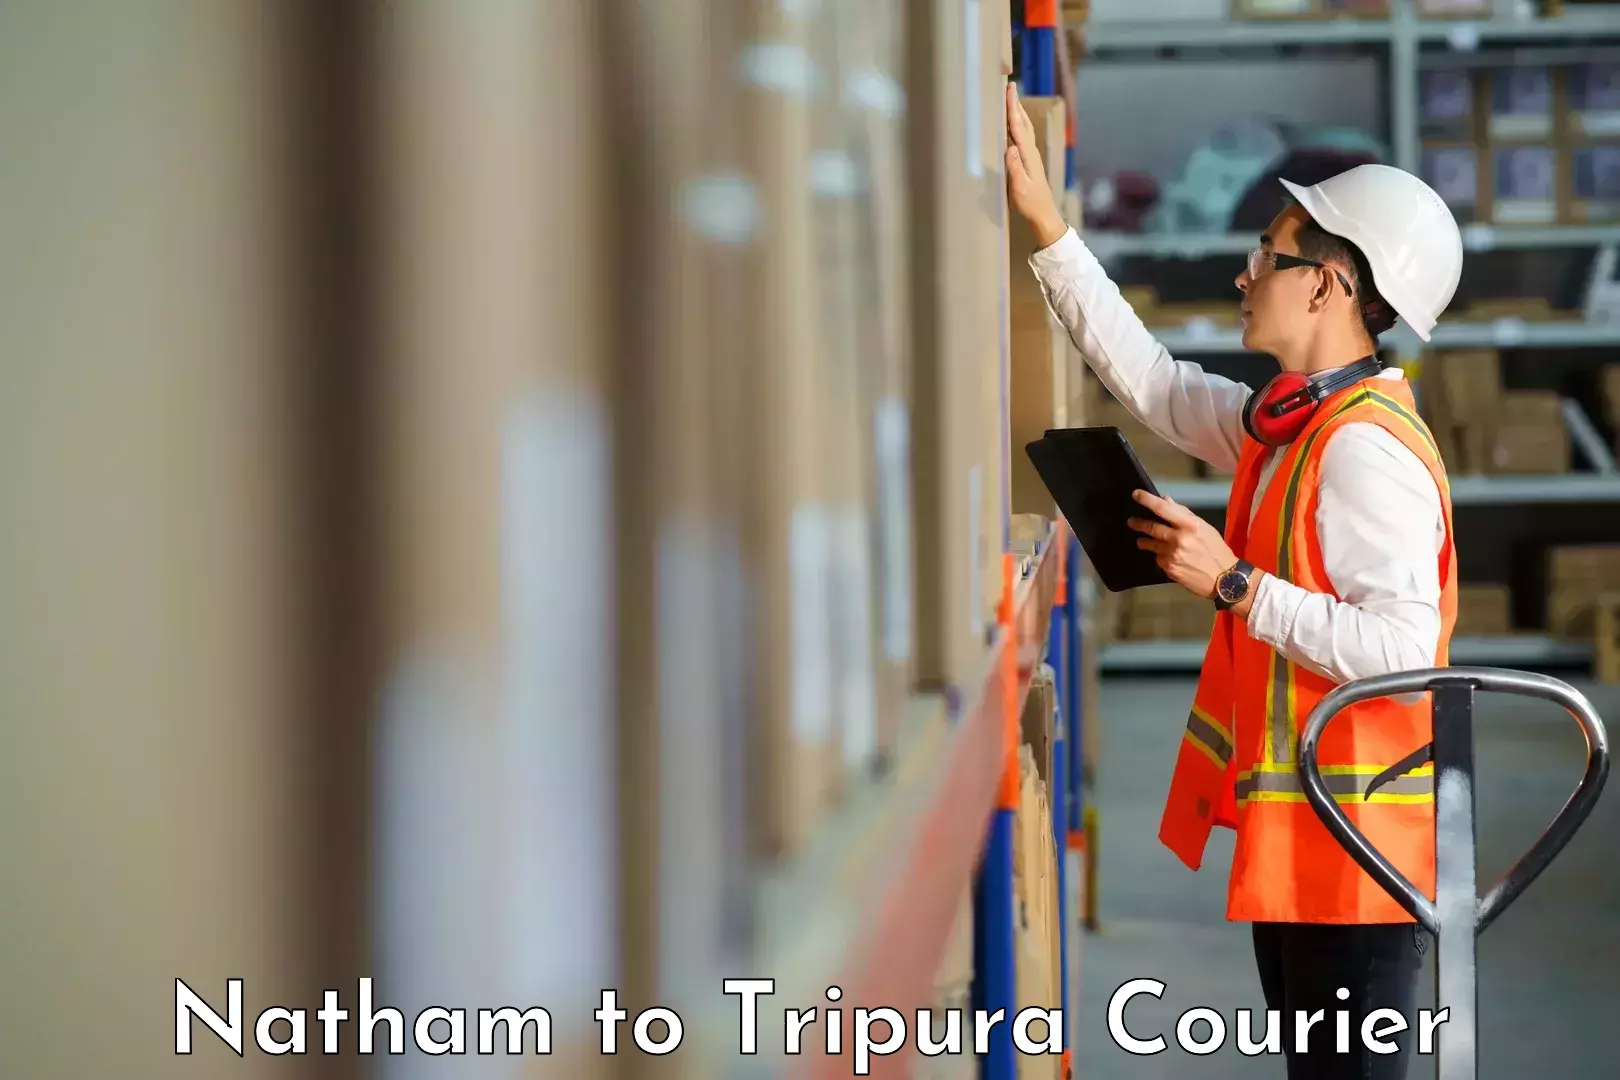 Quick dispatch service Natham to Udaipur Tripura